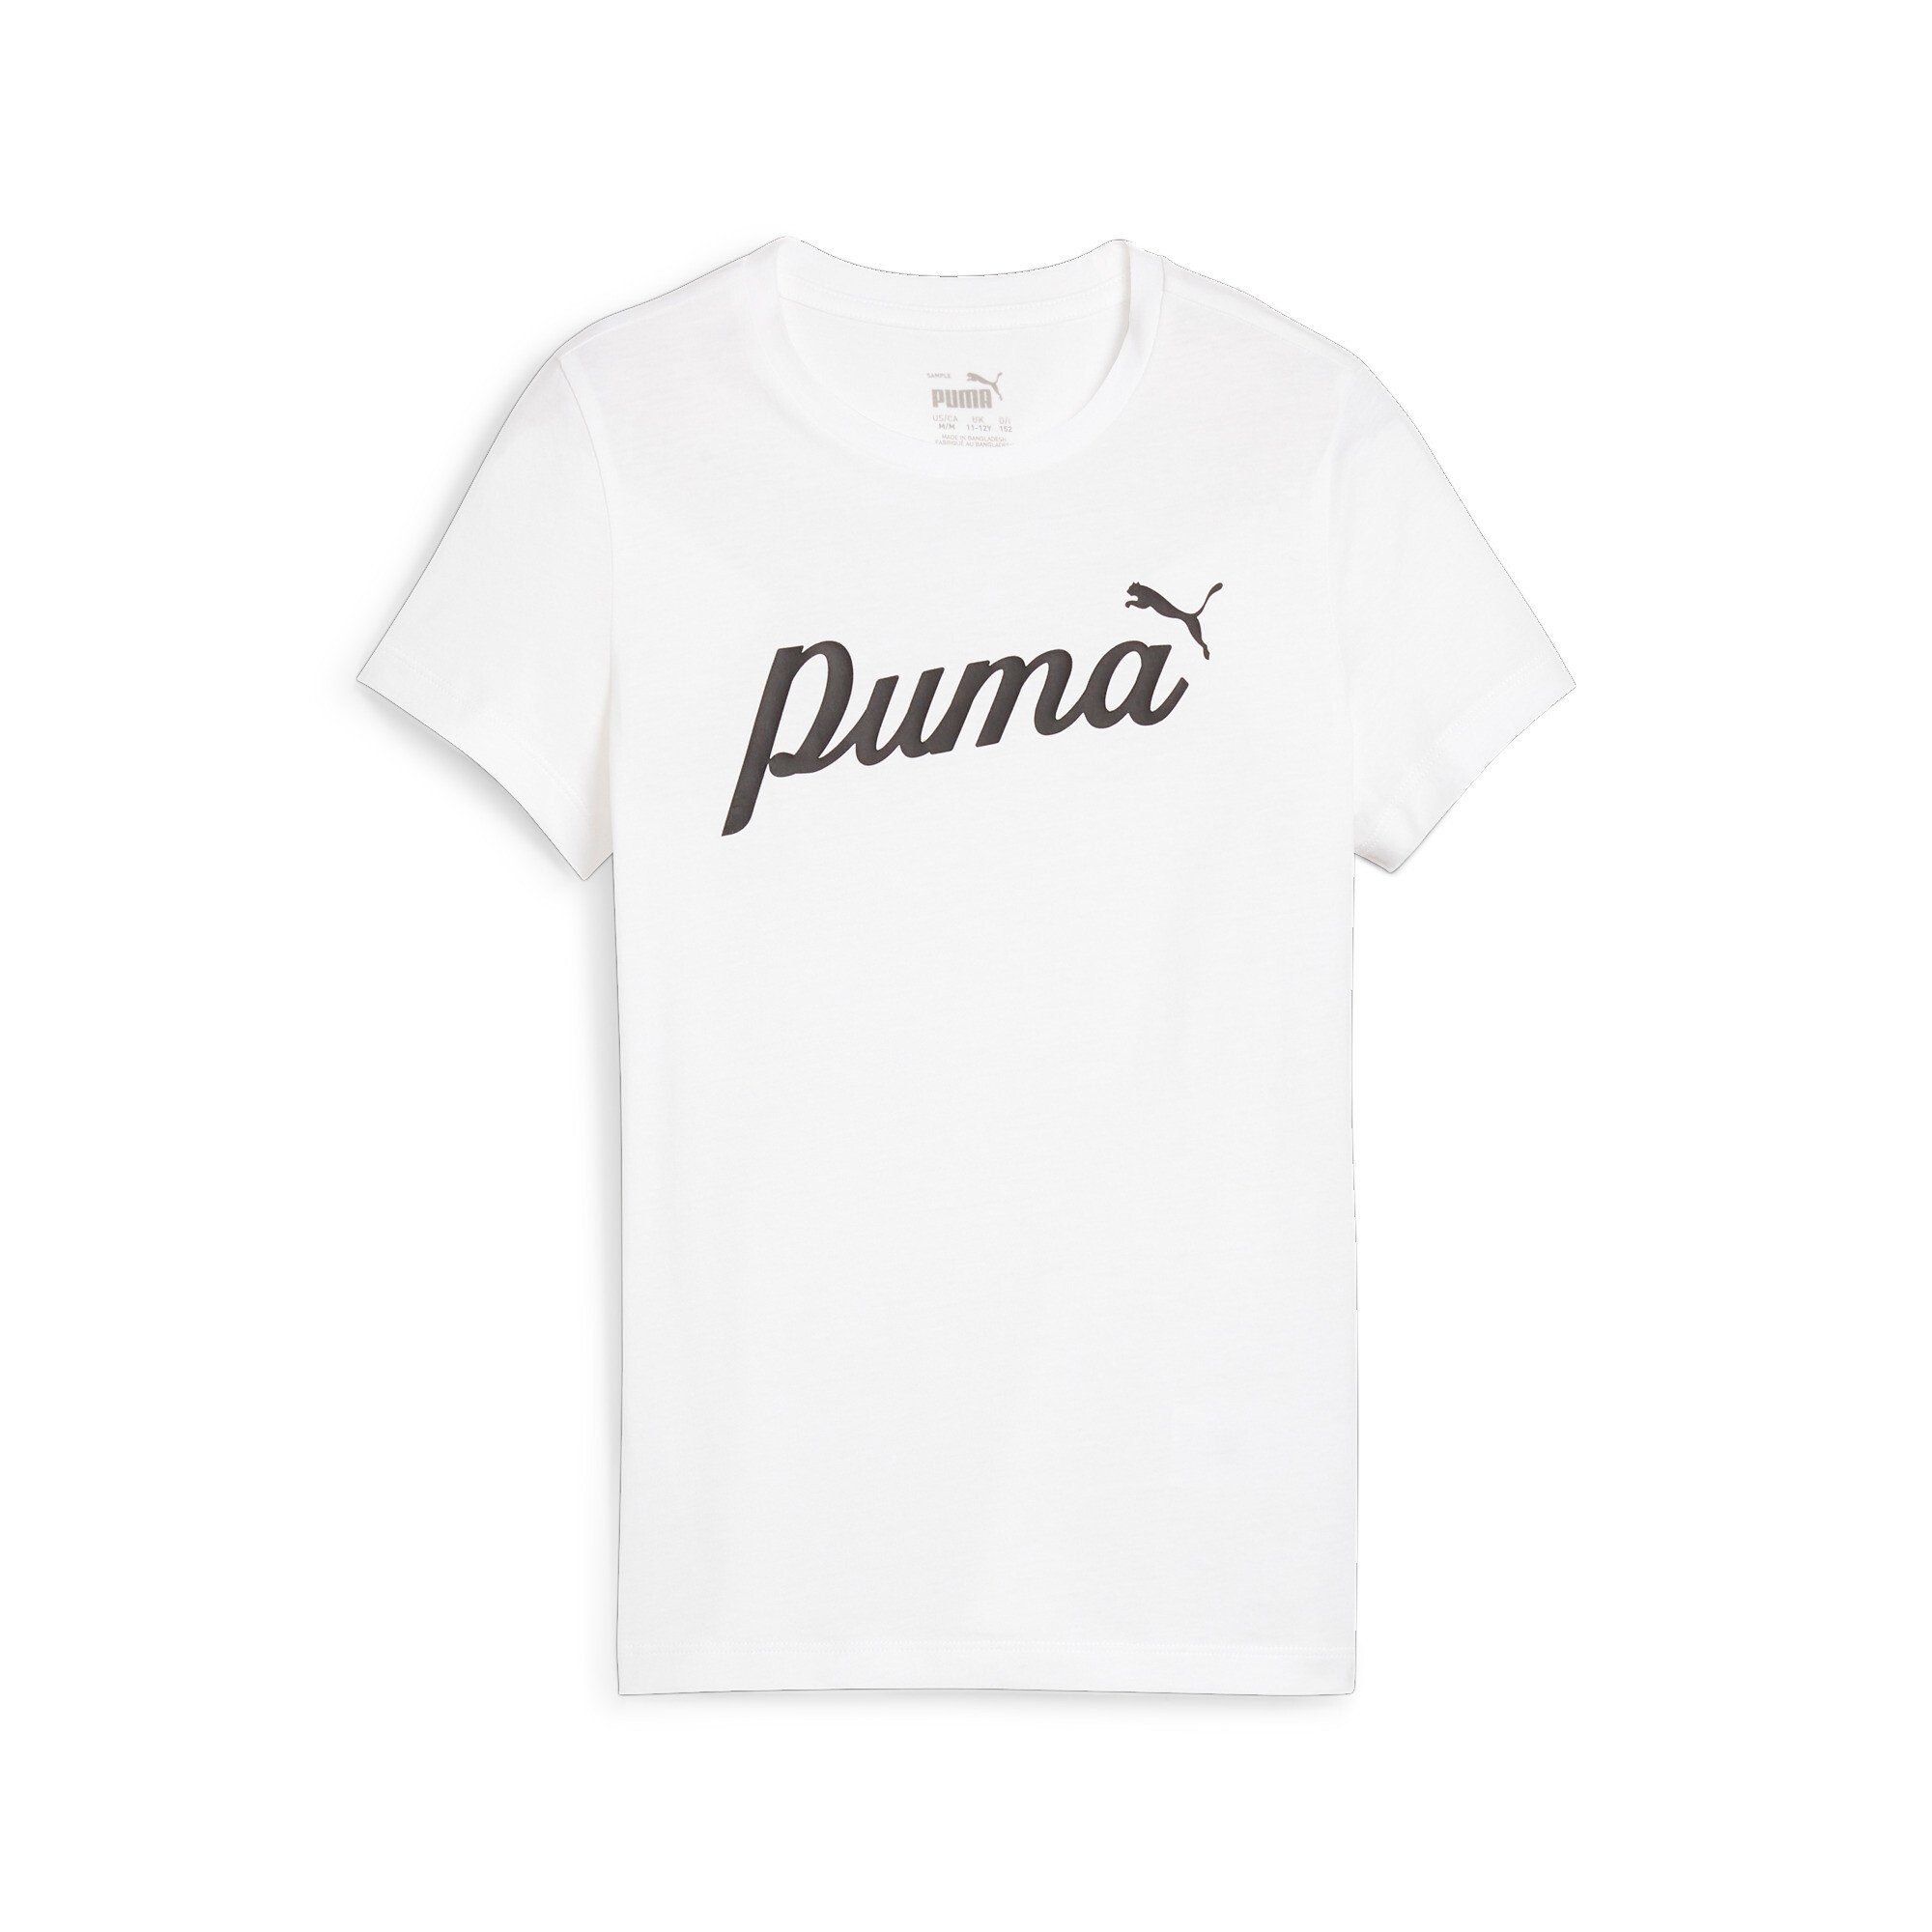 Puma T-shirt wit Katoen Ronde hals Printopdruk 140